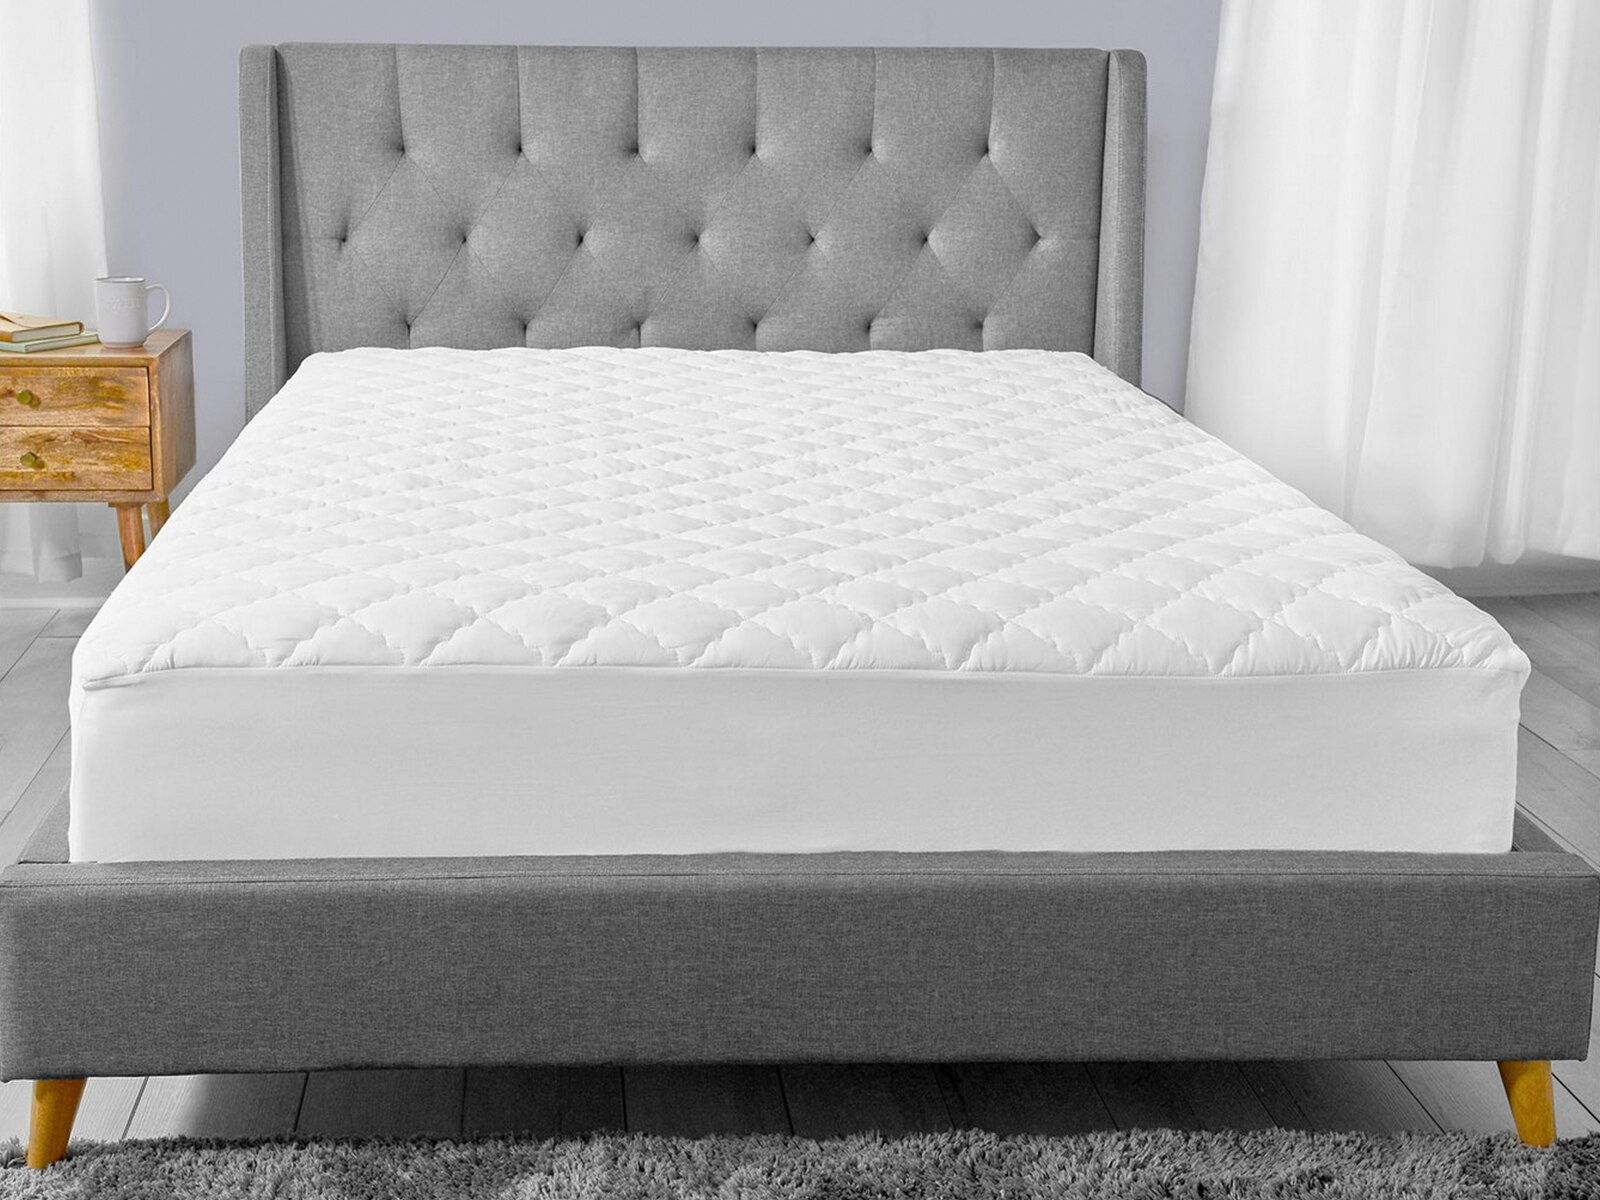 sealy waterproof mattress cover white 52 x 28